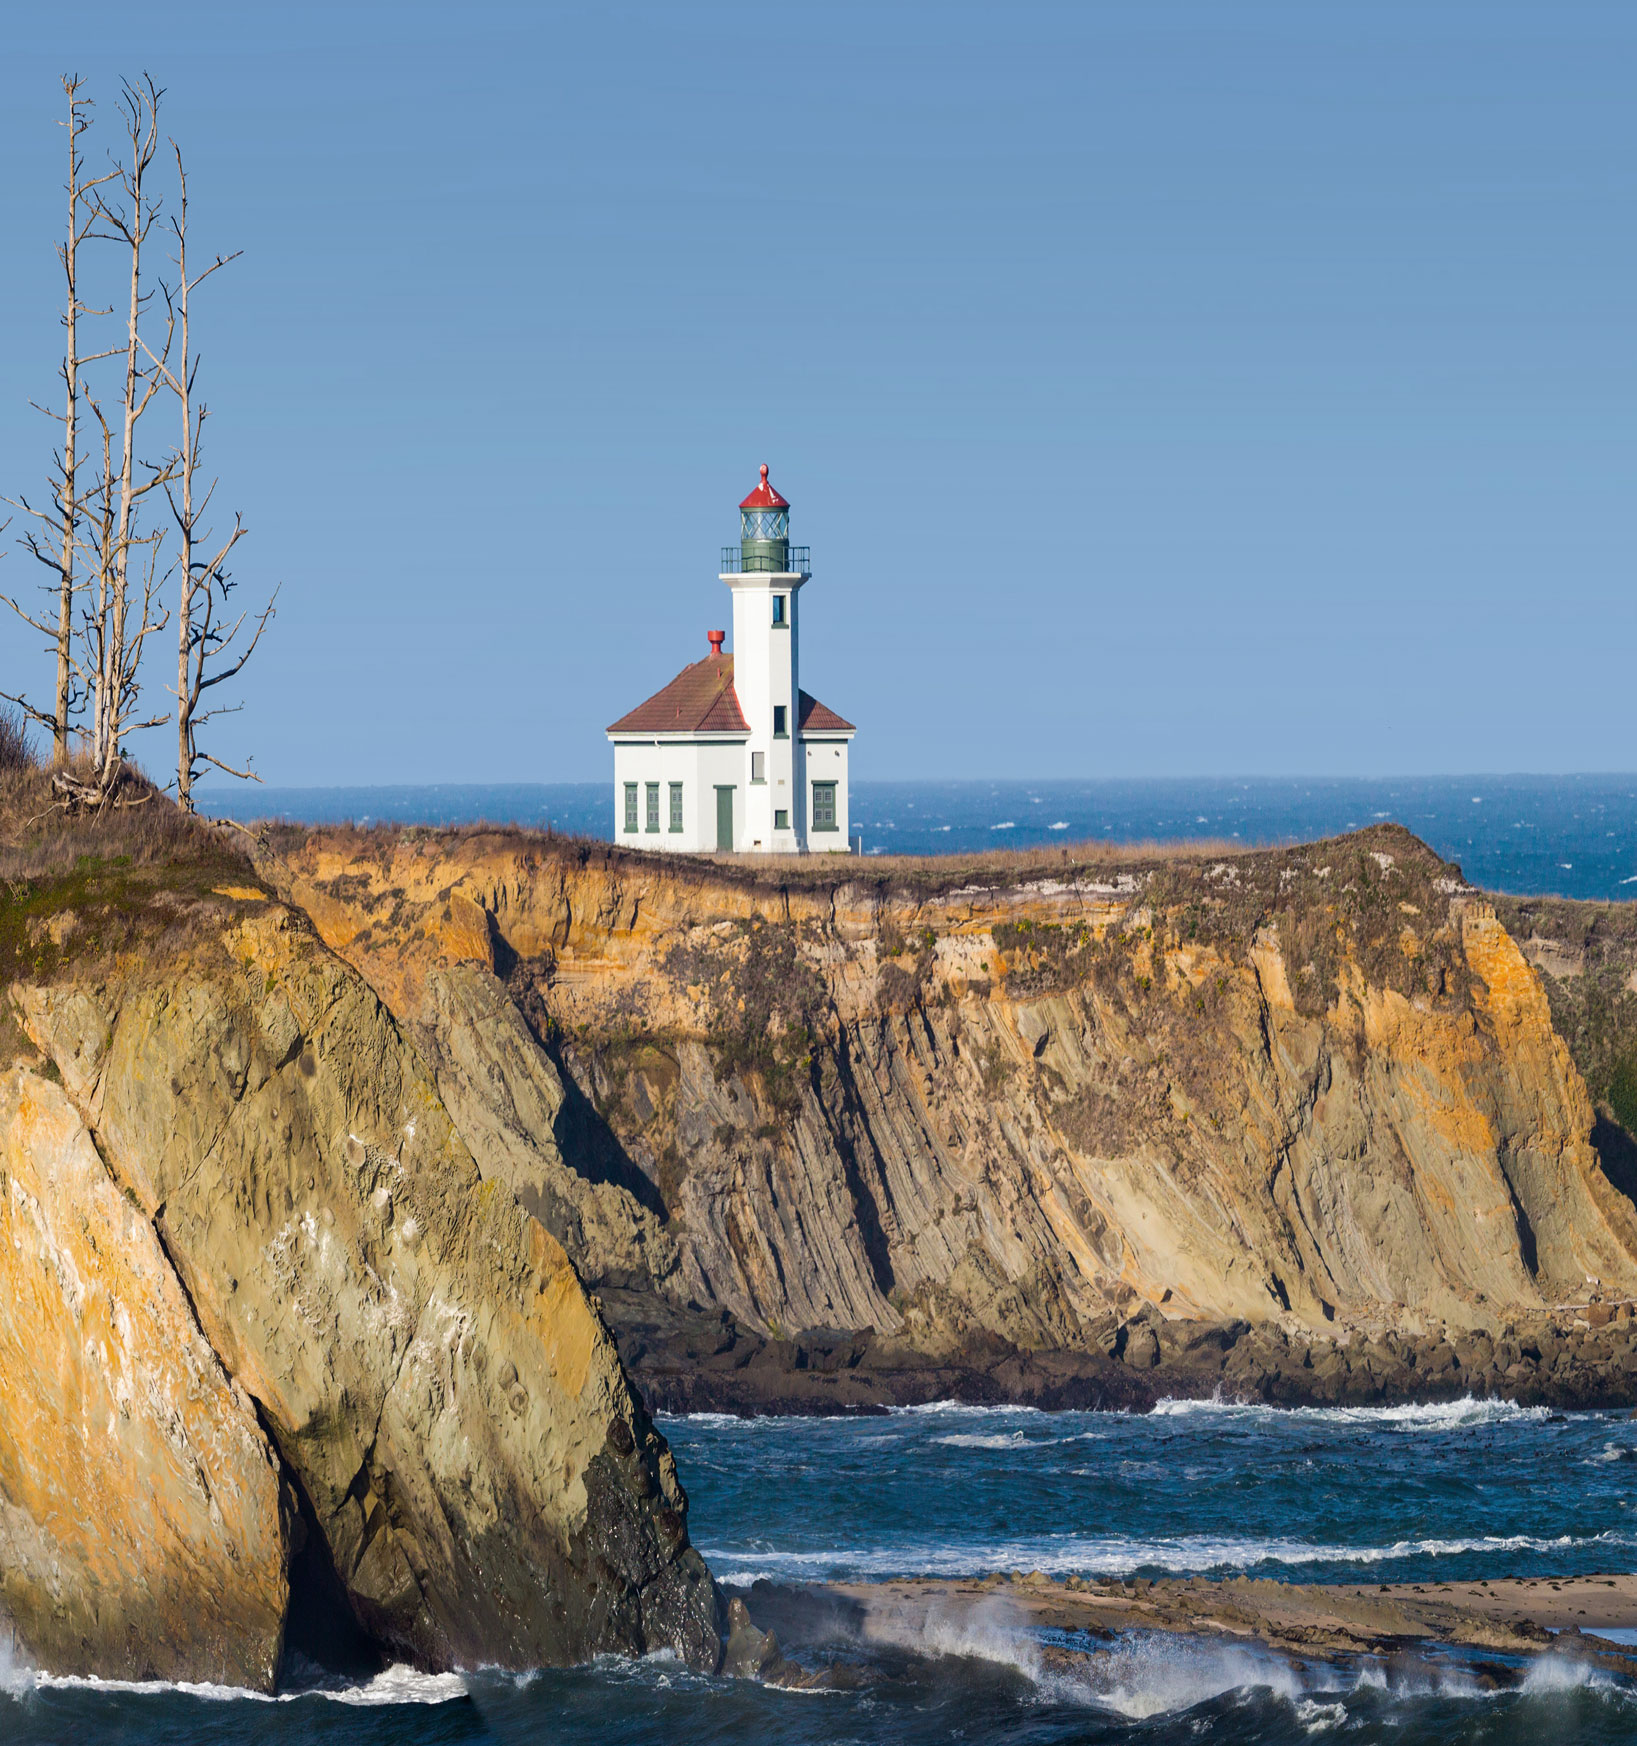 Cape Arago Lighthouse by Zhukova Valentyna via Shutterstock crop